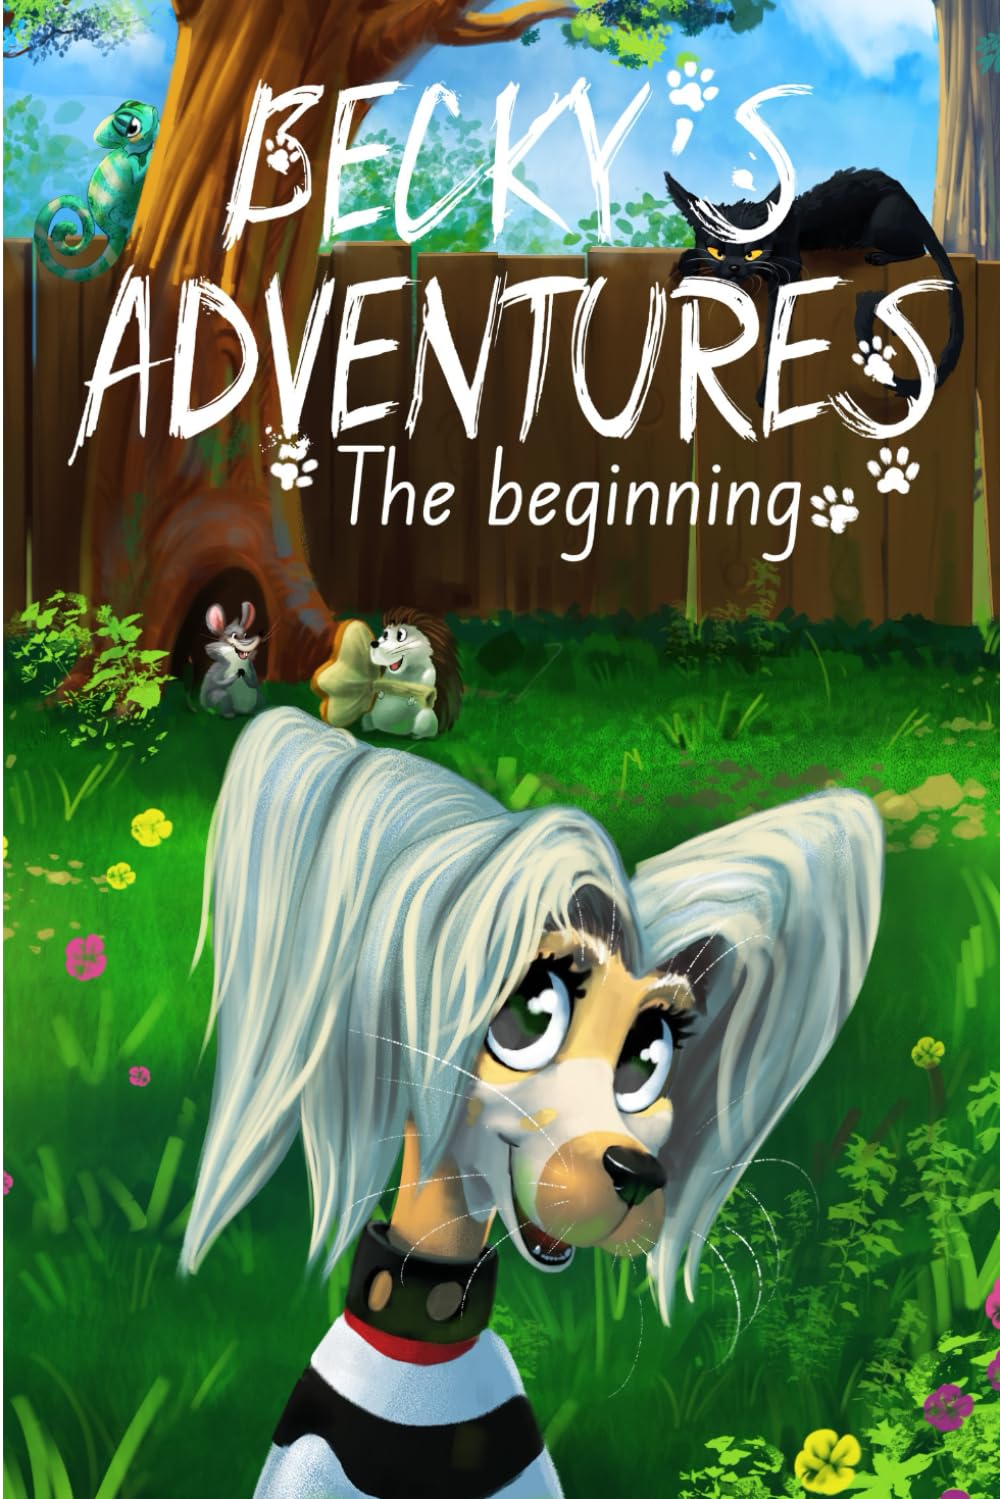 Becky's Adventures: The Beginning